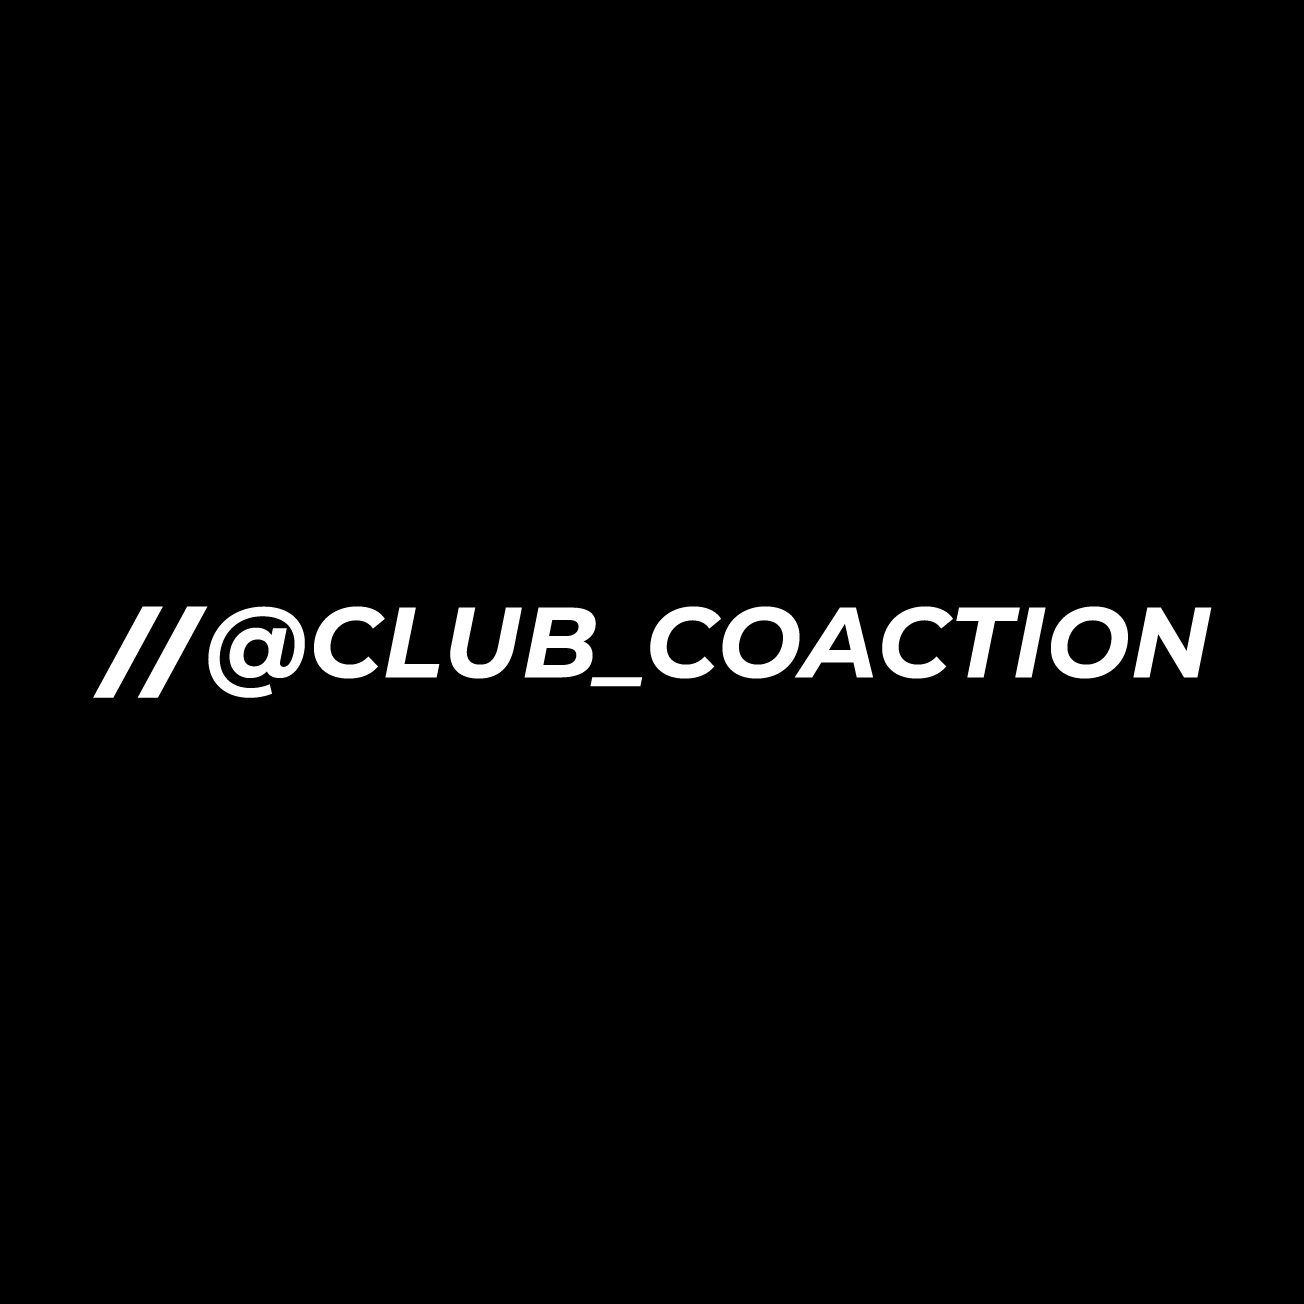 Club Image for CLUB COACTION BLACK